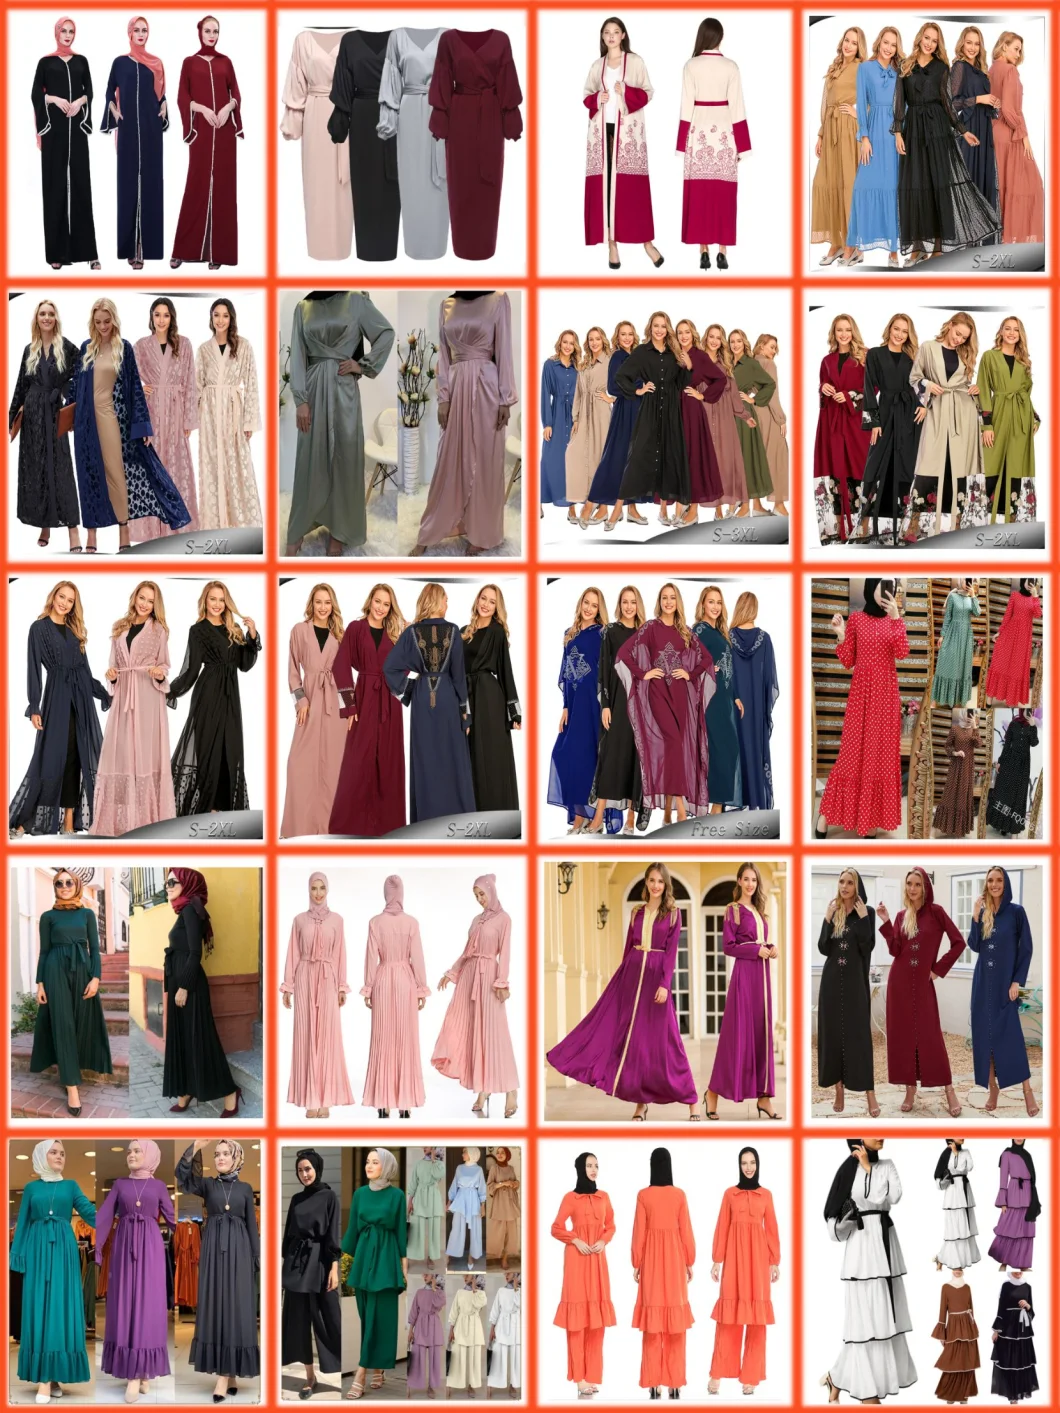 2020 New Design Fashion Wholesale Muslim Scarfs Hijabs Muslim Head Wrap Headscarf Muslim Islamic Head Covering Muslim Women Head Covering Black Hijab